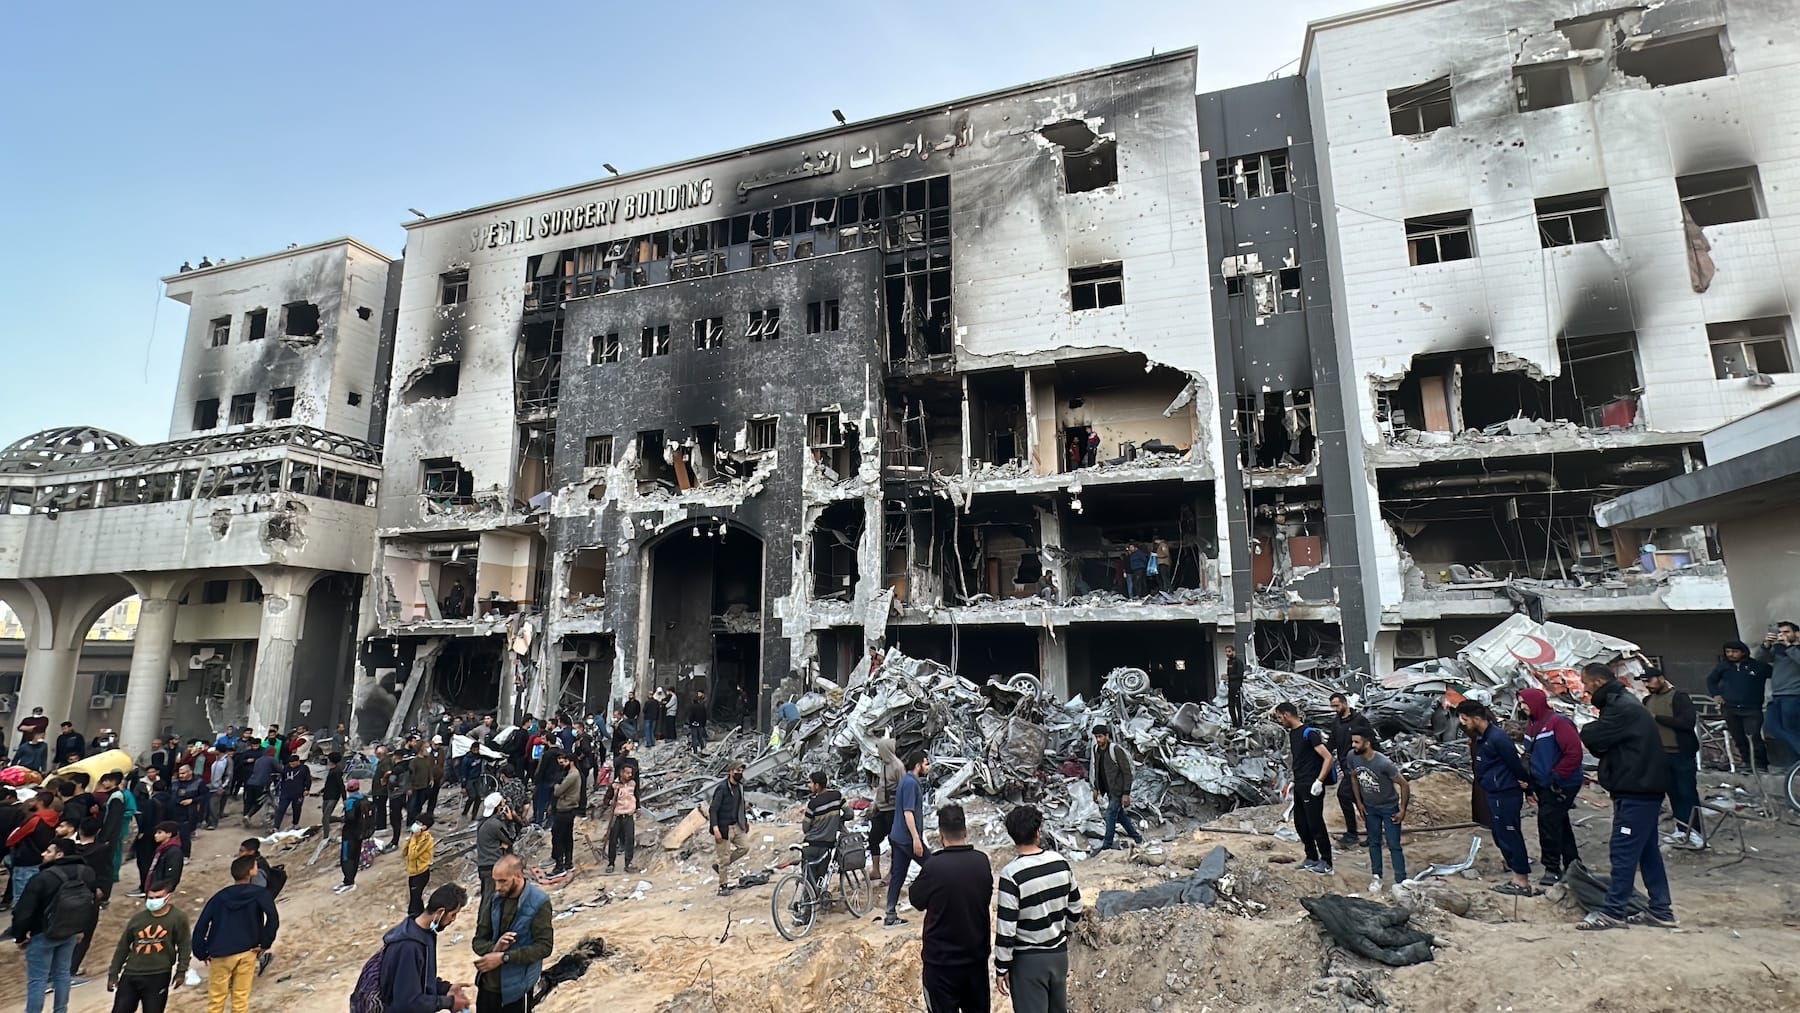 al shifa hospital gaza after israel seige